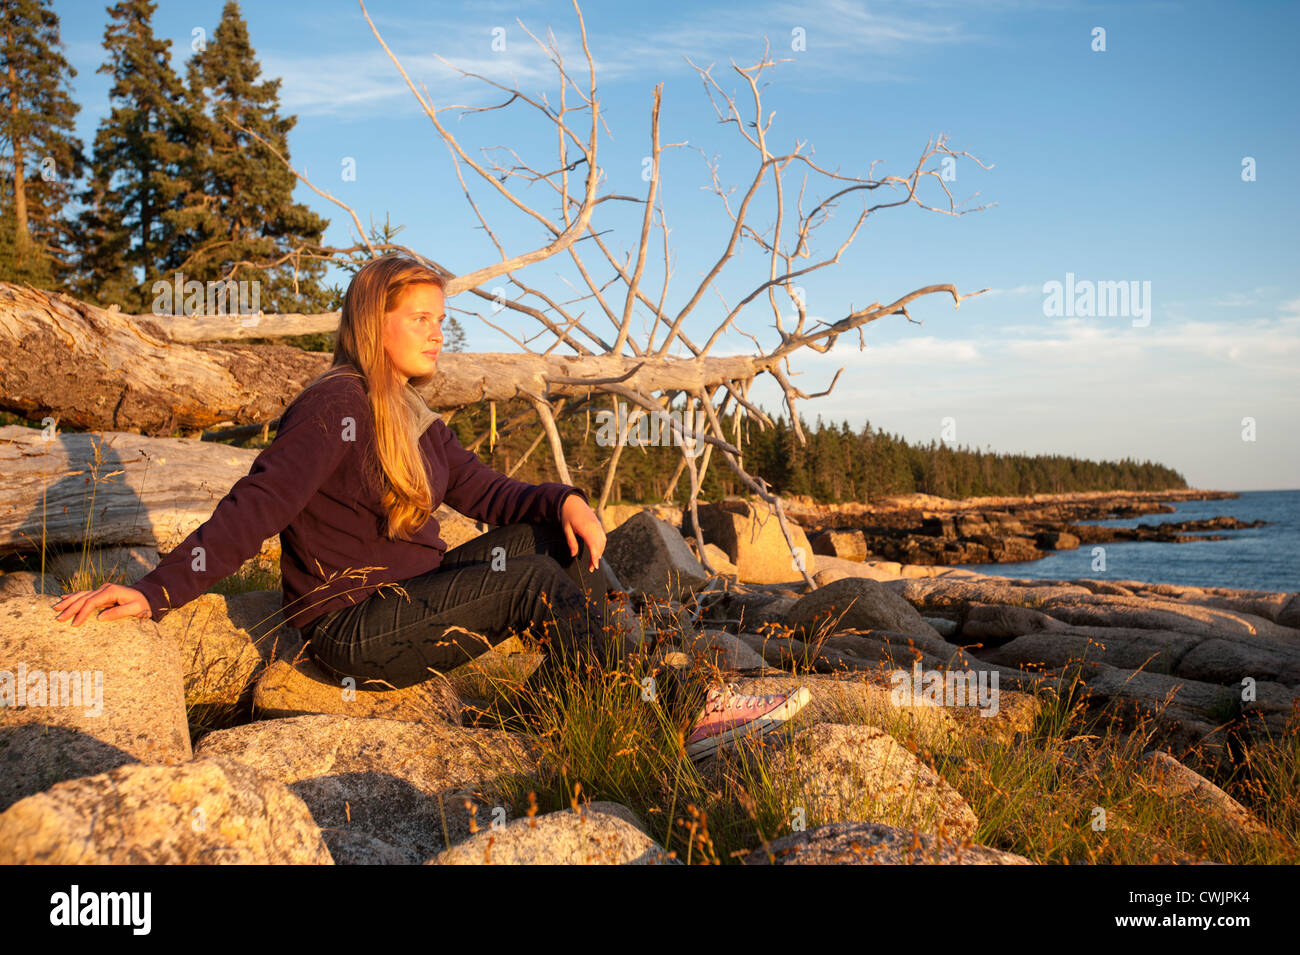 Young woman sitting on Rocky beach au coucher du soleil, l'Acadia National Park, Maine USA Banque D'Images